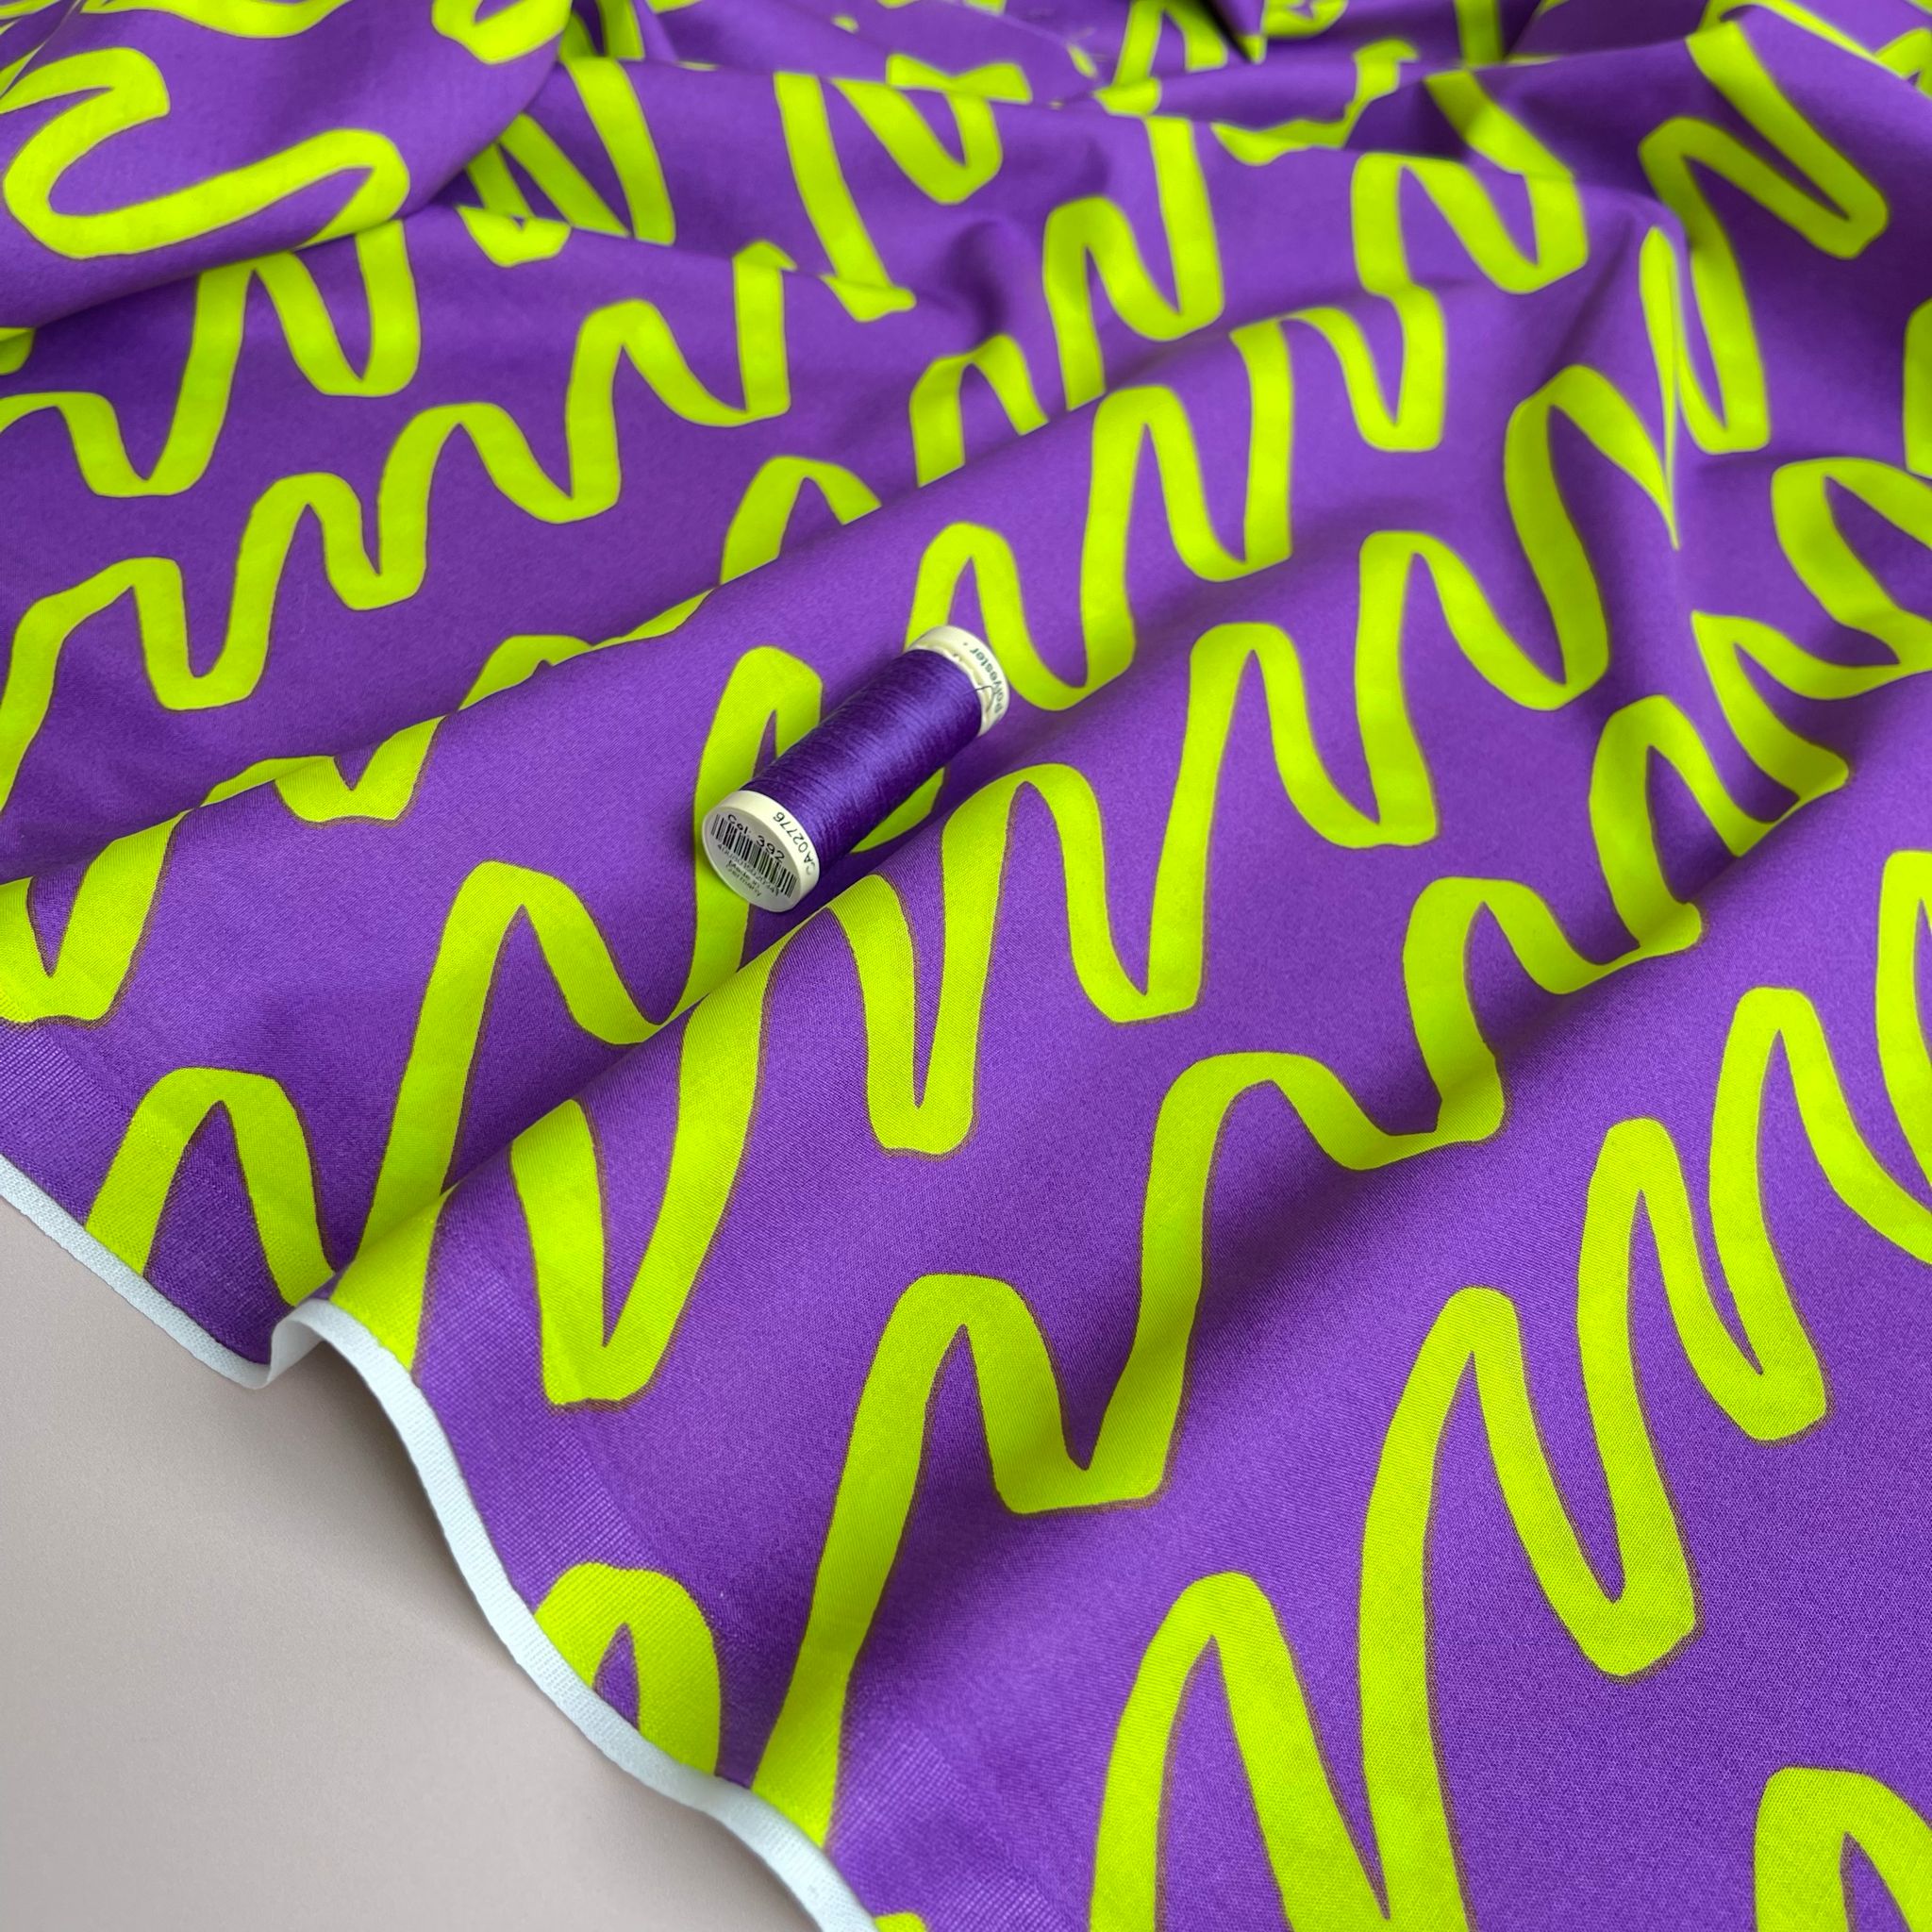 REMNANT 1.75 Metres - Nerida Hansen - Making Waves on Purple Cotton Poplin Fabric